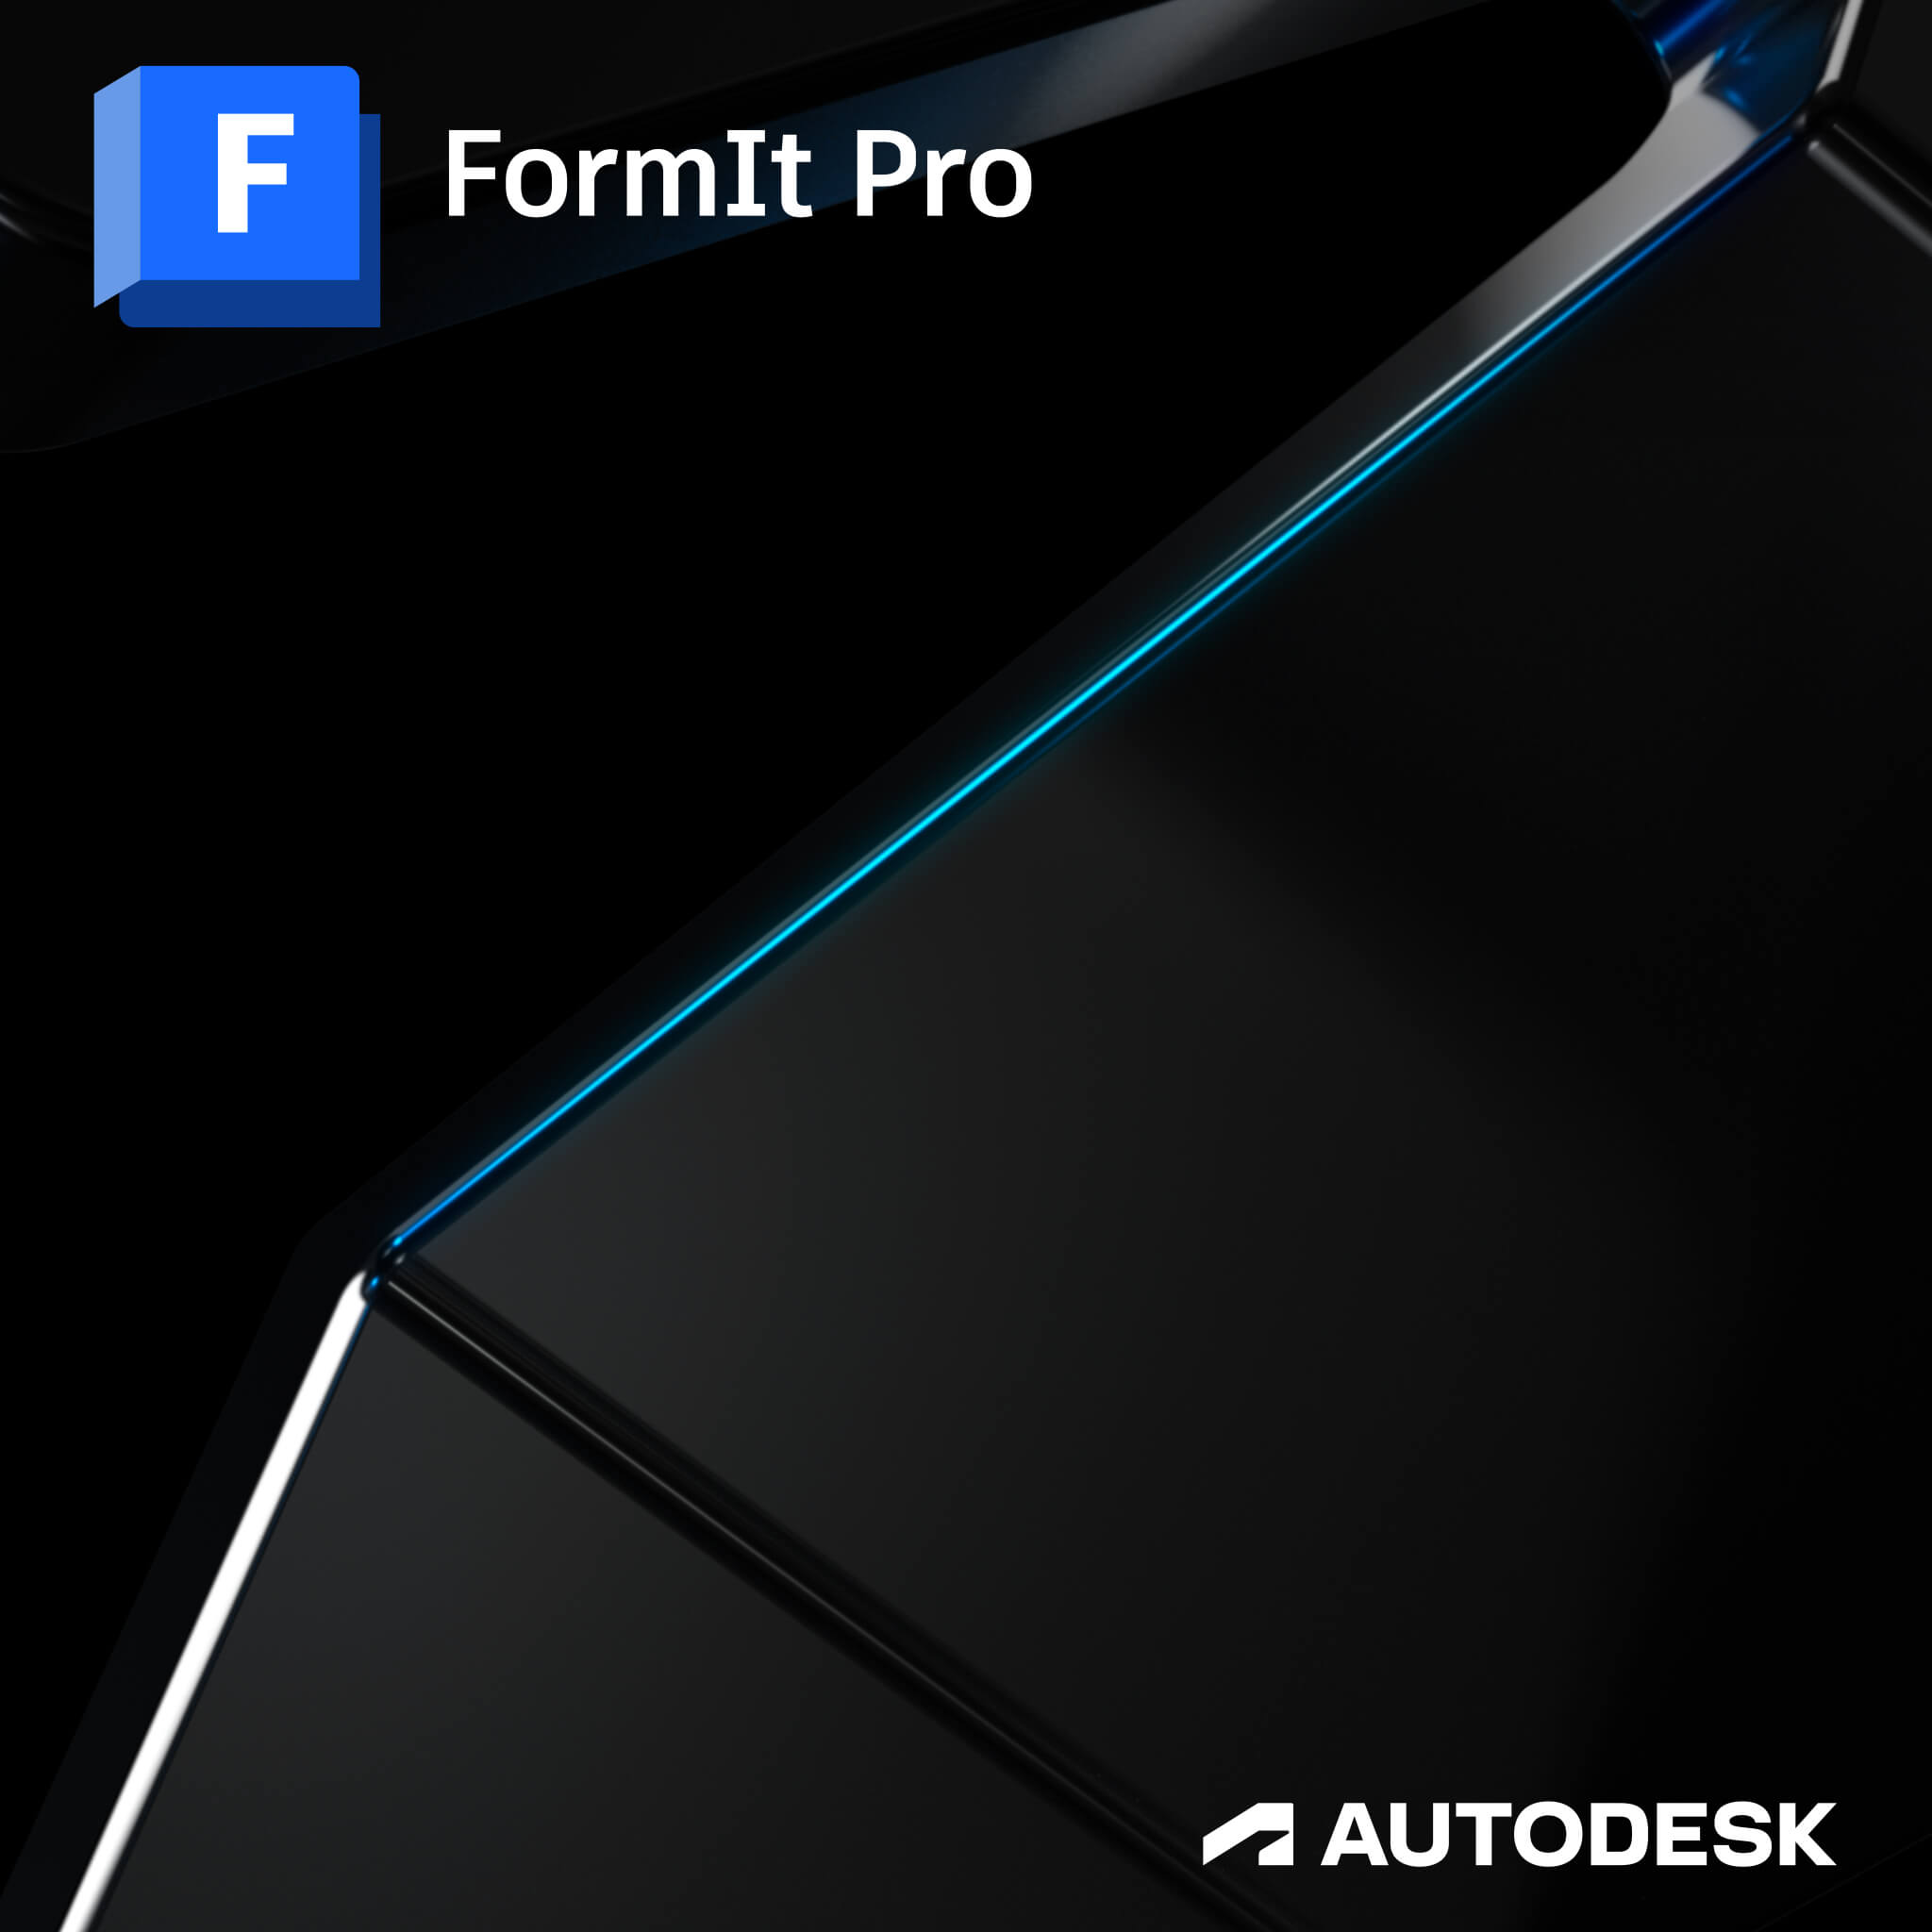 Formit Pro